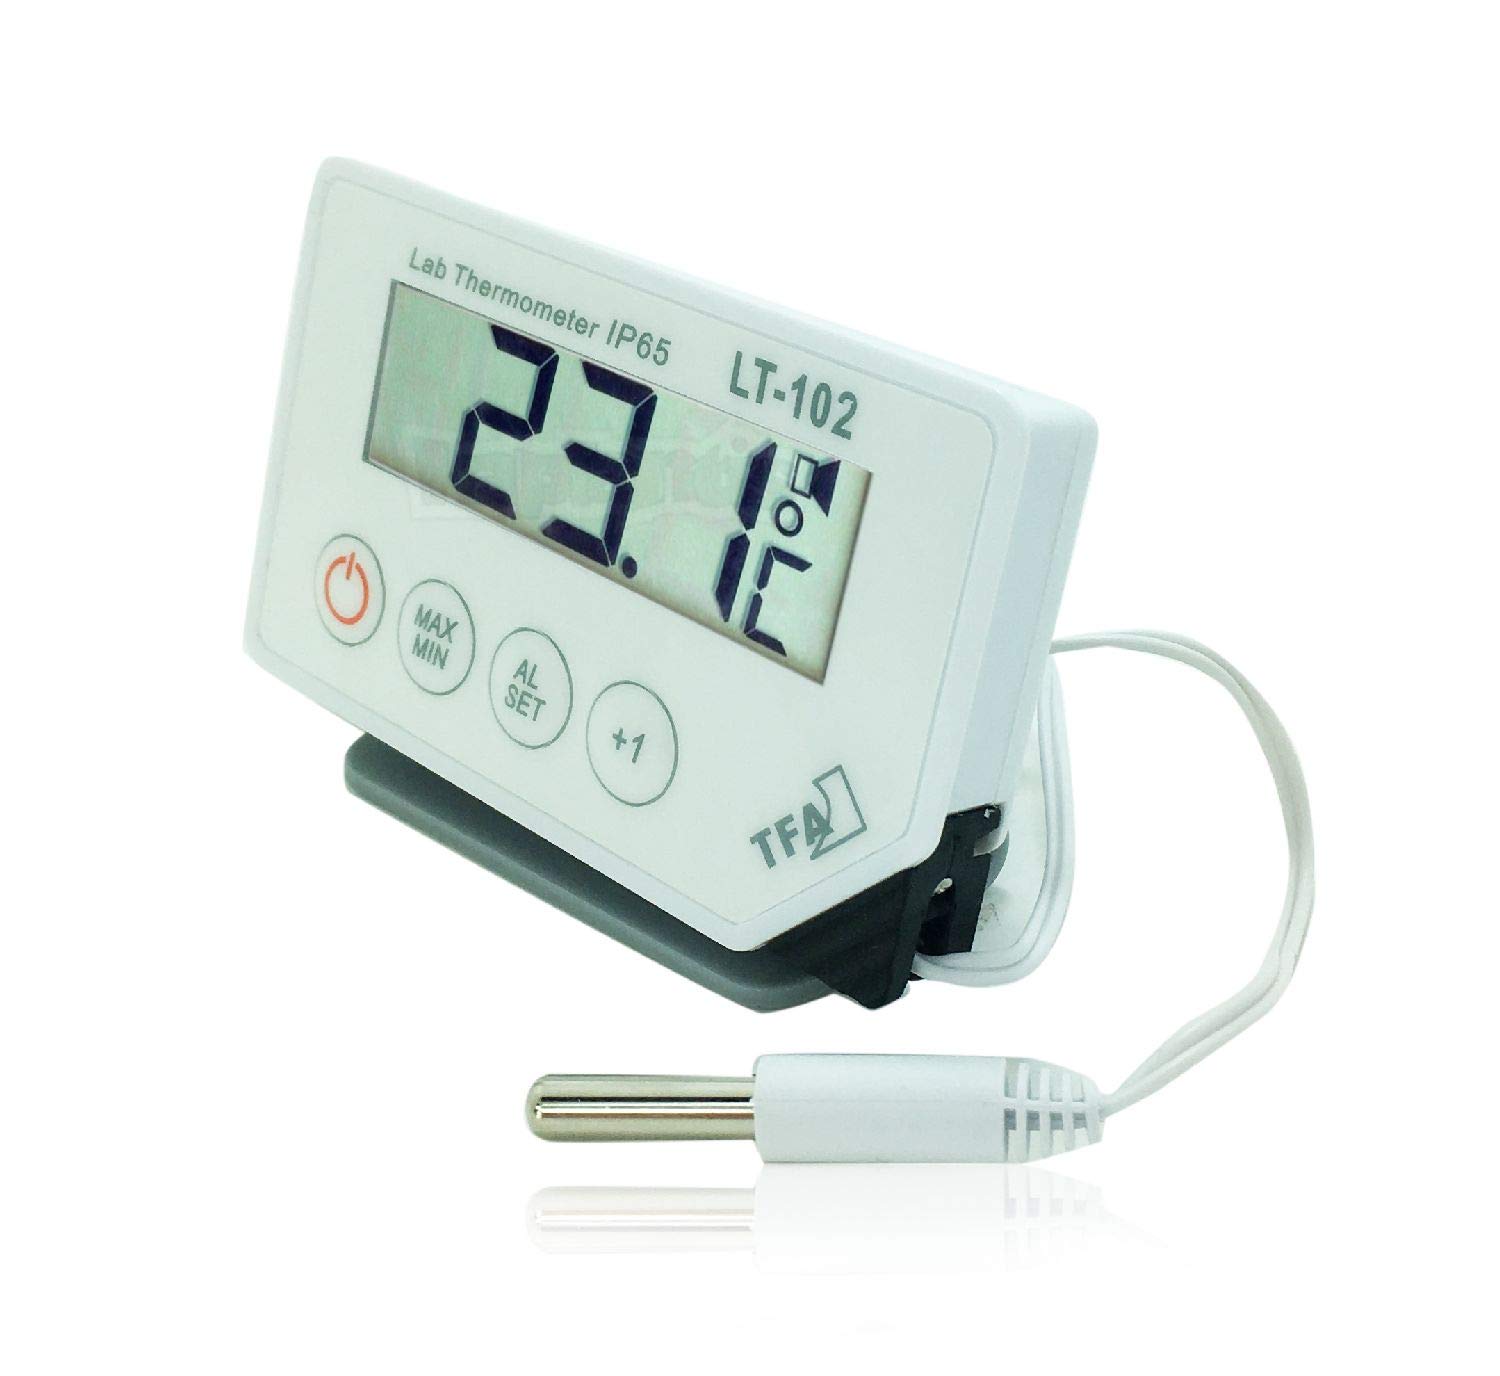 TFA 30.1034 LT 102 Mini Termometre HACCP Onaylı -40... +70 °C